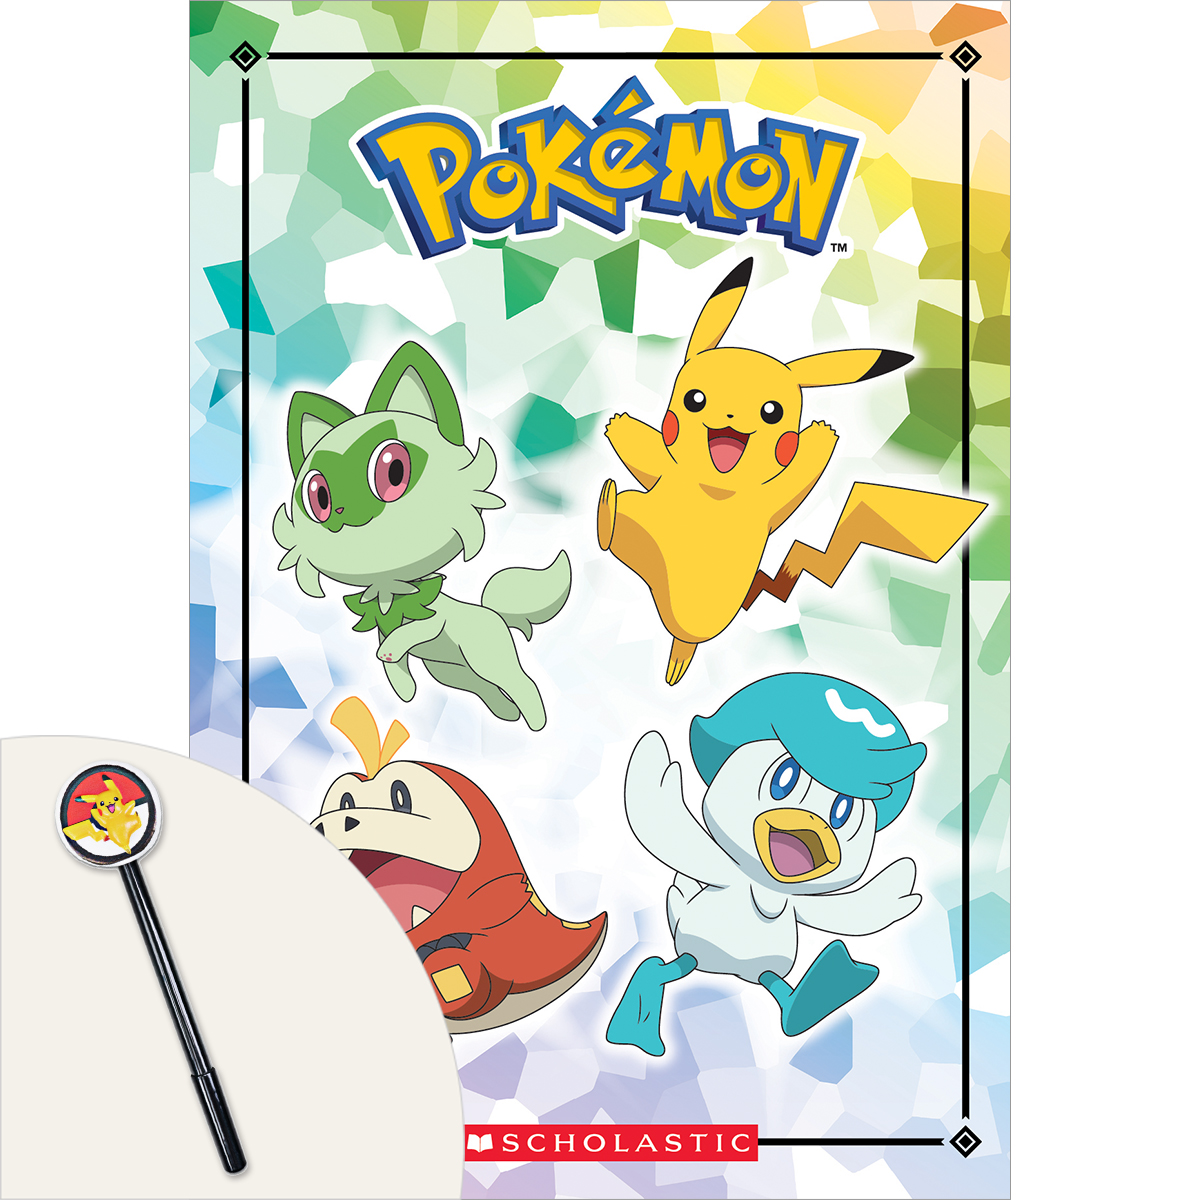  Pokémon Journal and Squishy Pikachu Pen 